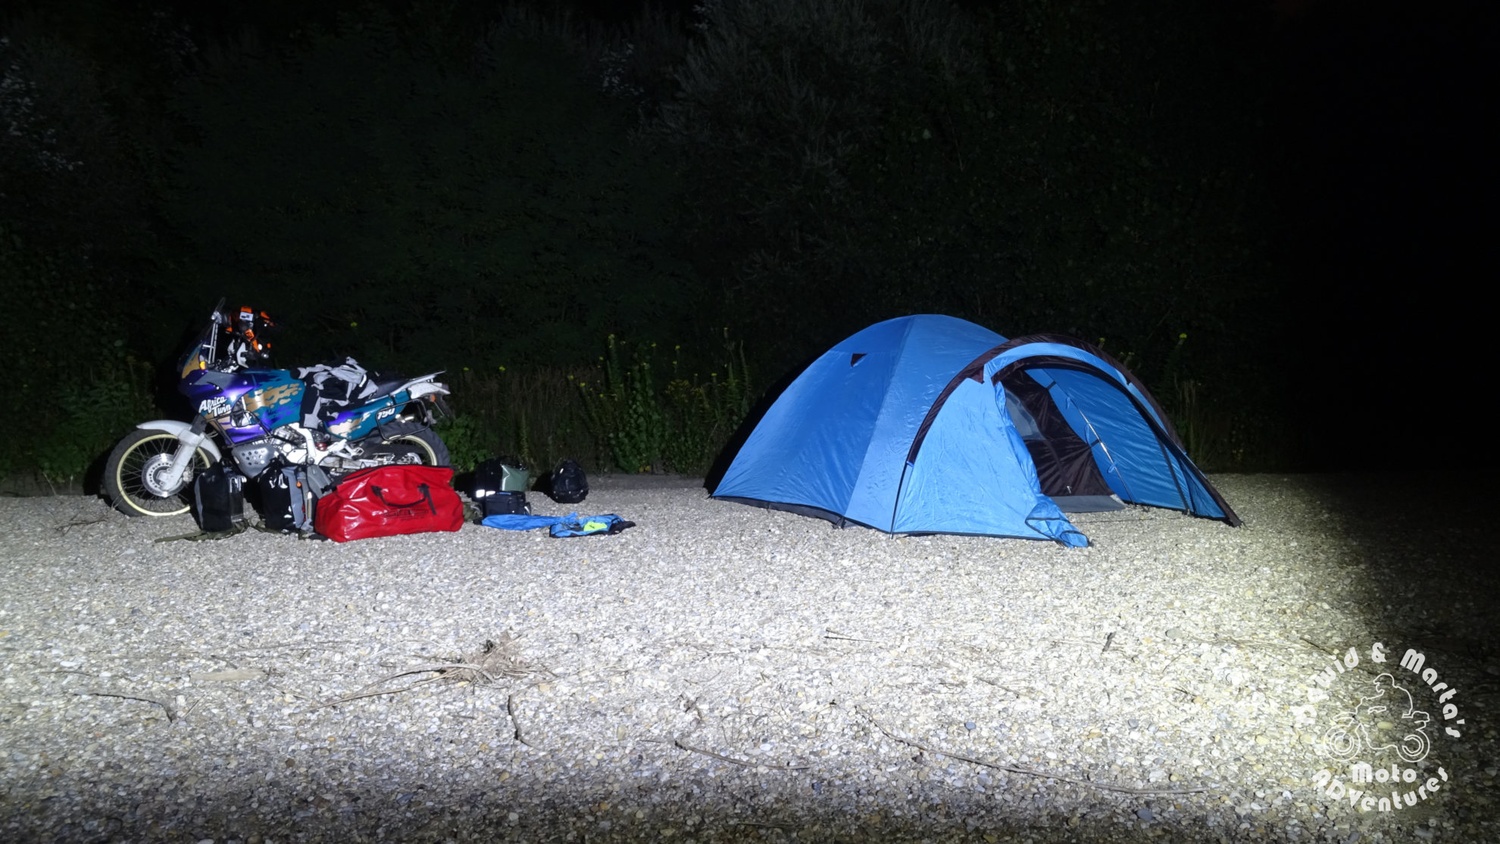 Our late night camp at Drava River, Croatia